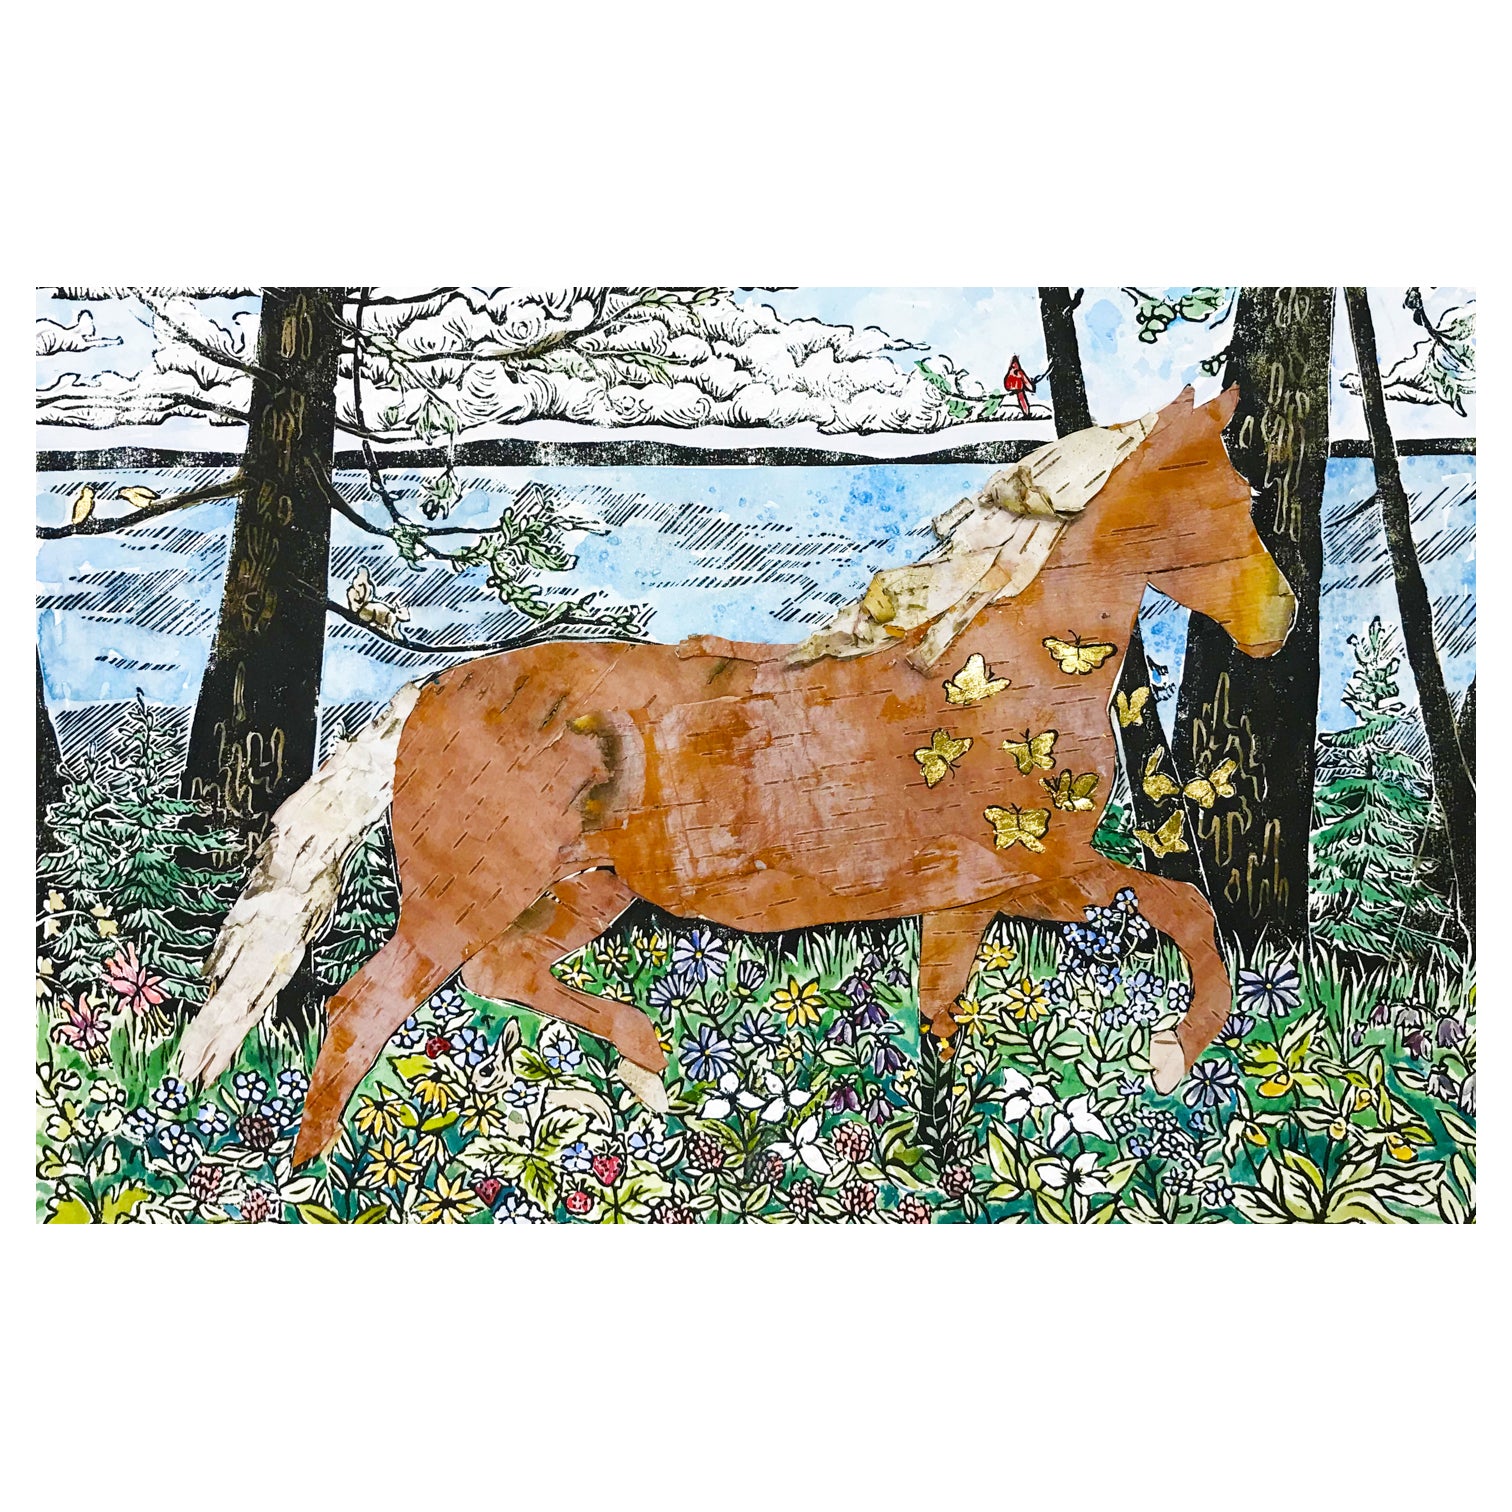 Horse art by Natalia Wohletz of Peninsula Prints, Milford & Mackinac Island, Michigan, titled Morning Frolic #2.